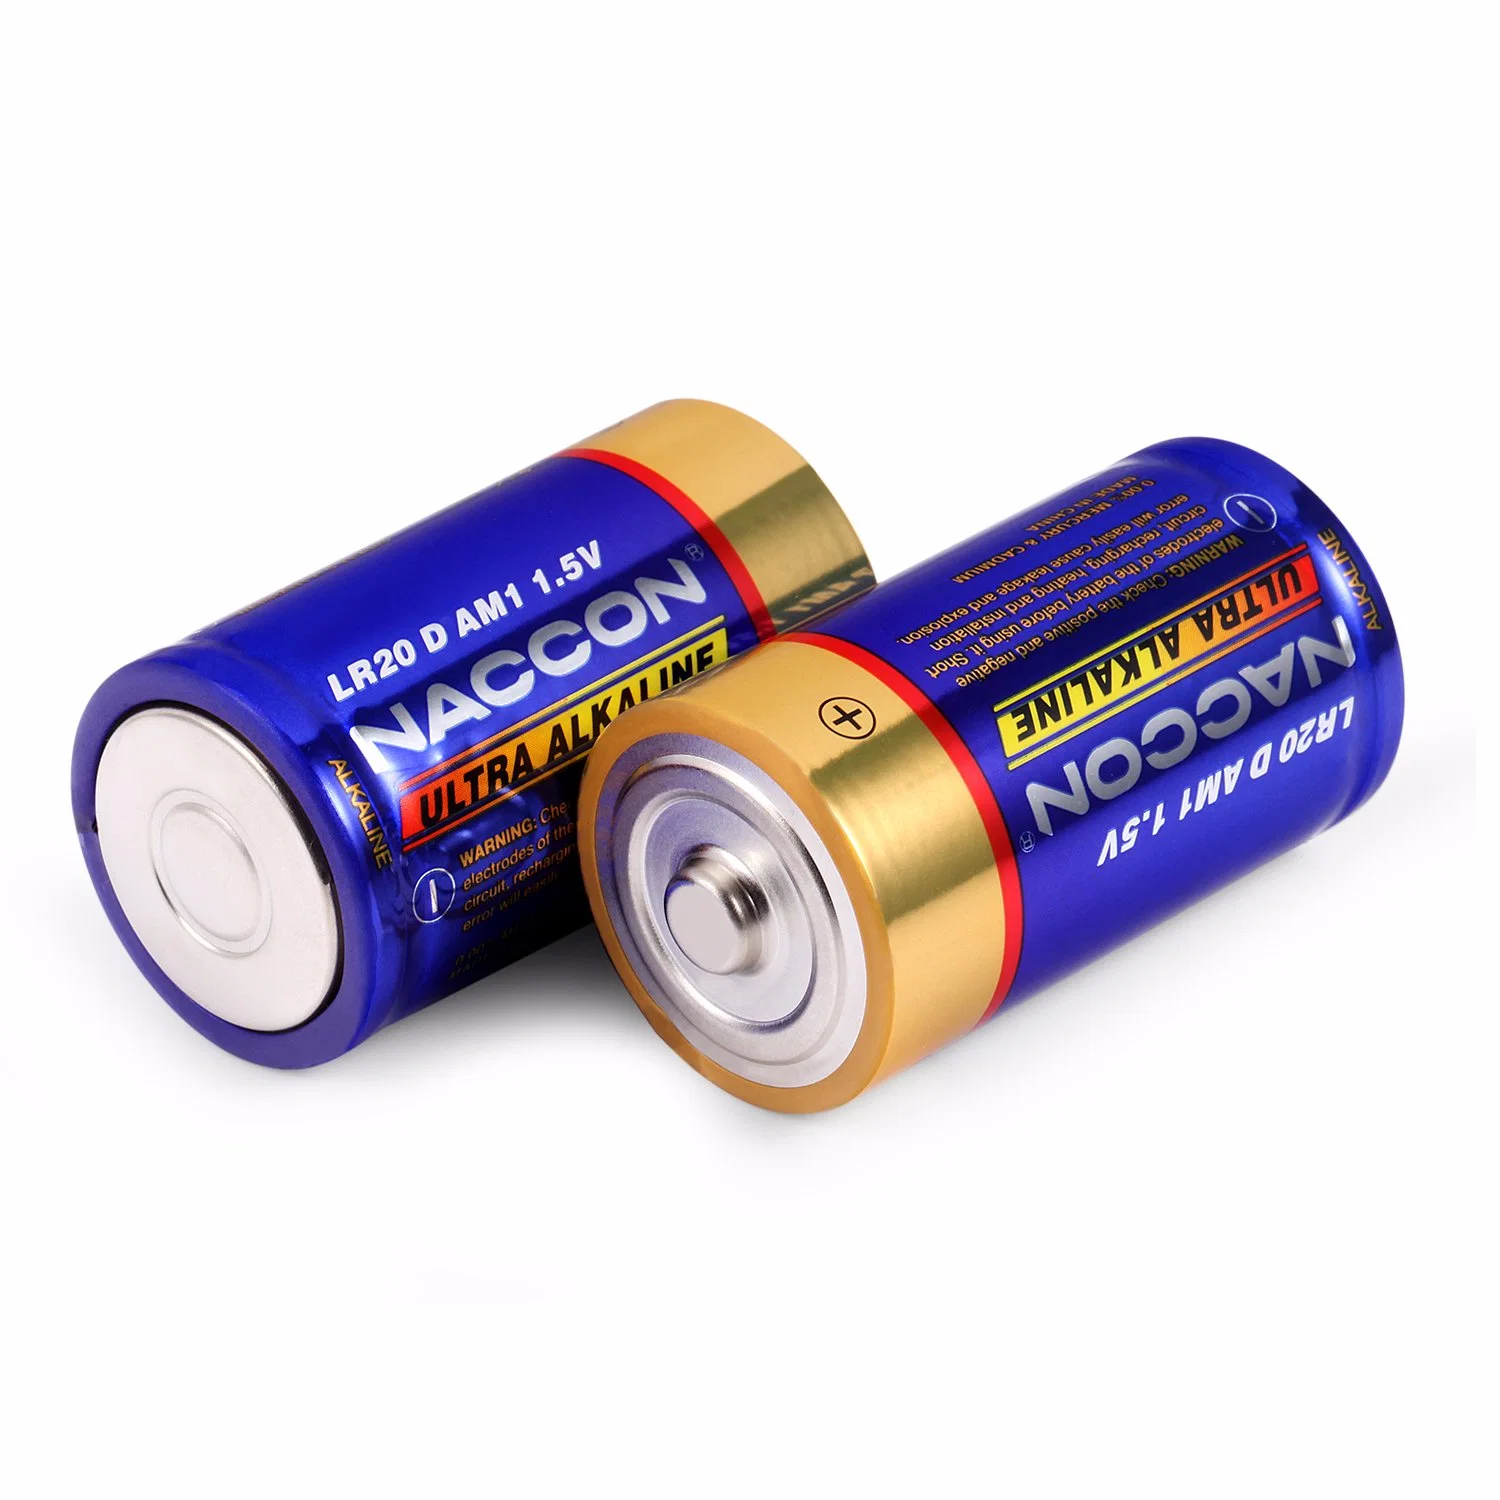 Alkaline Battery D Size Lr20 1.5V Primary Dry Battery